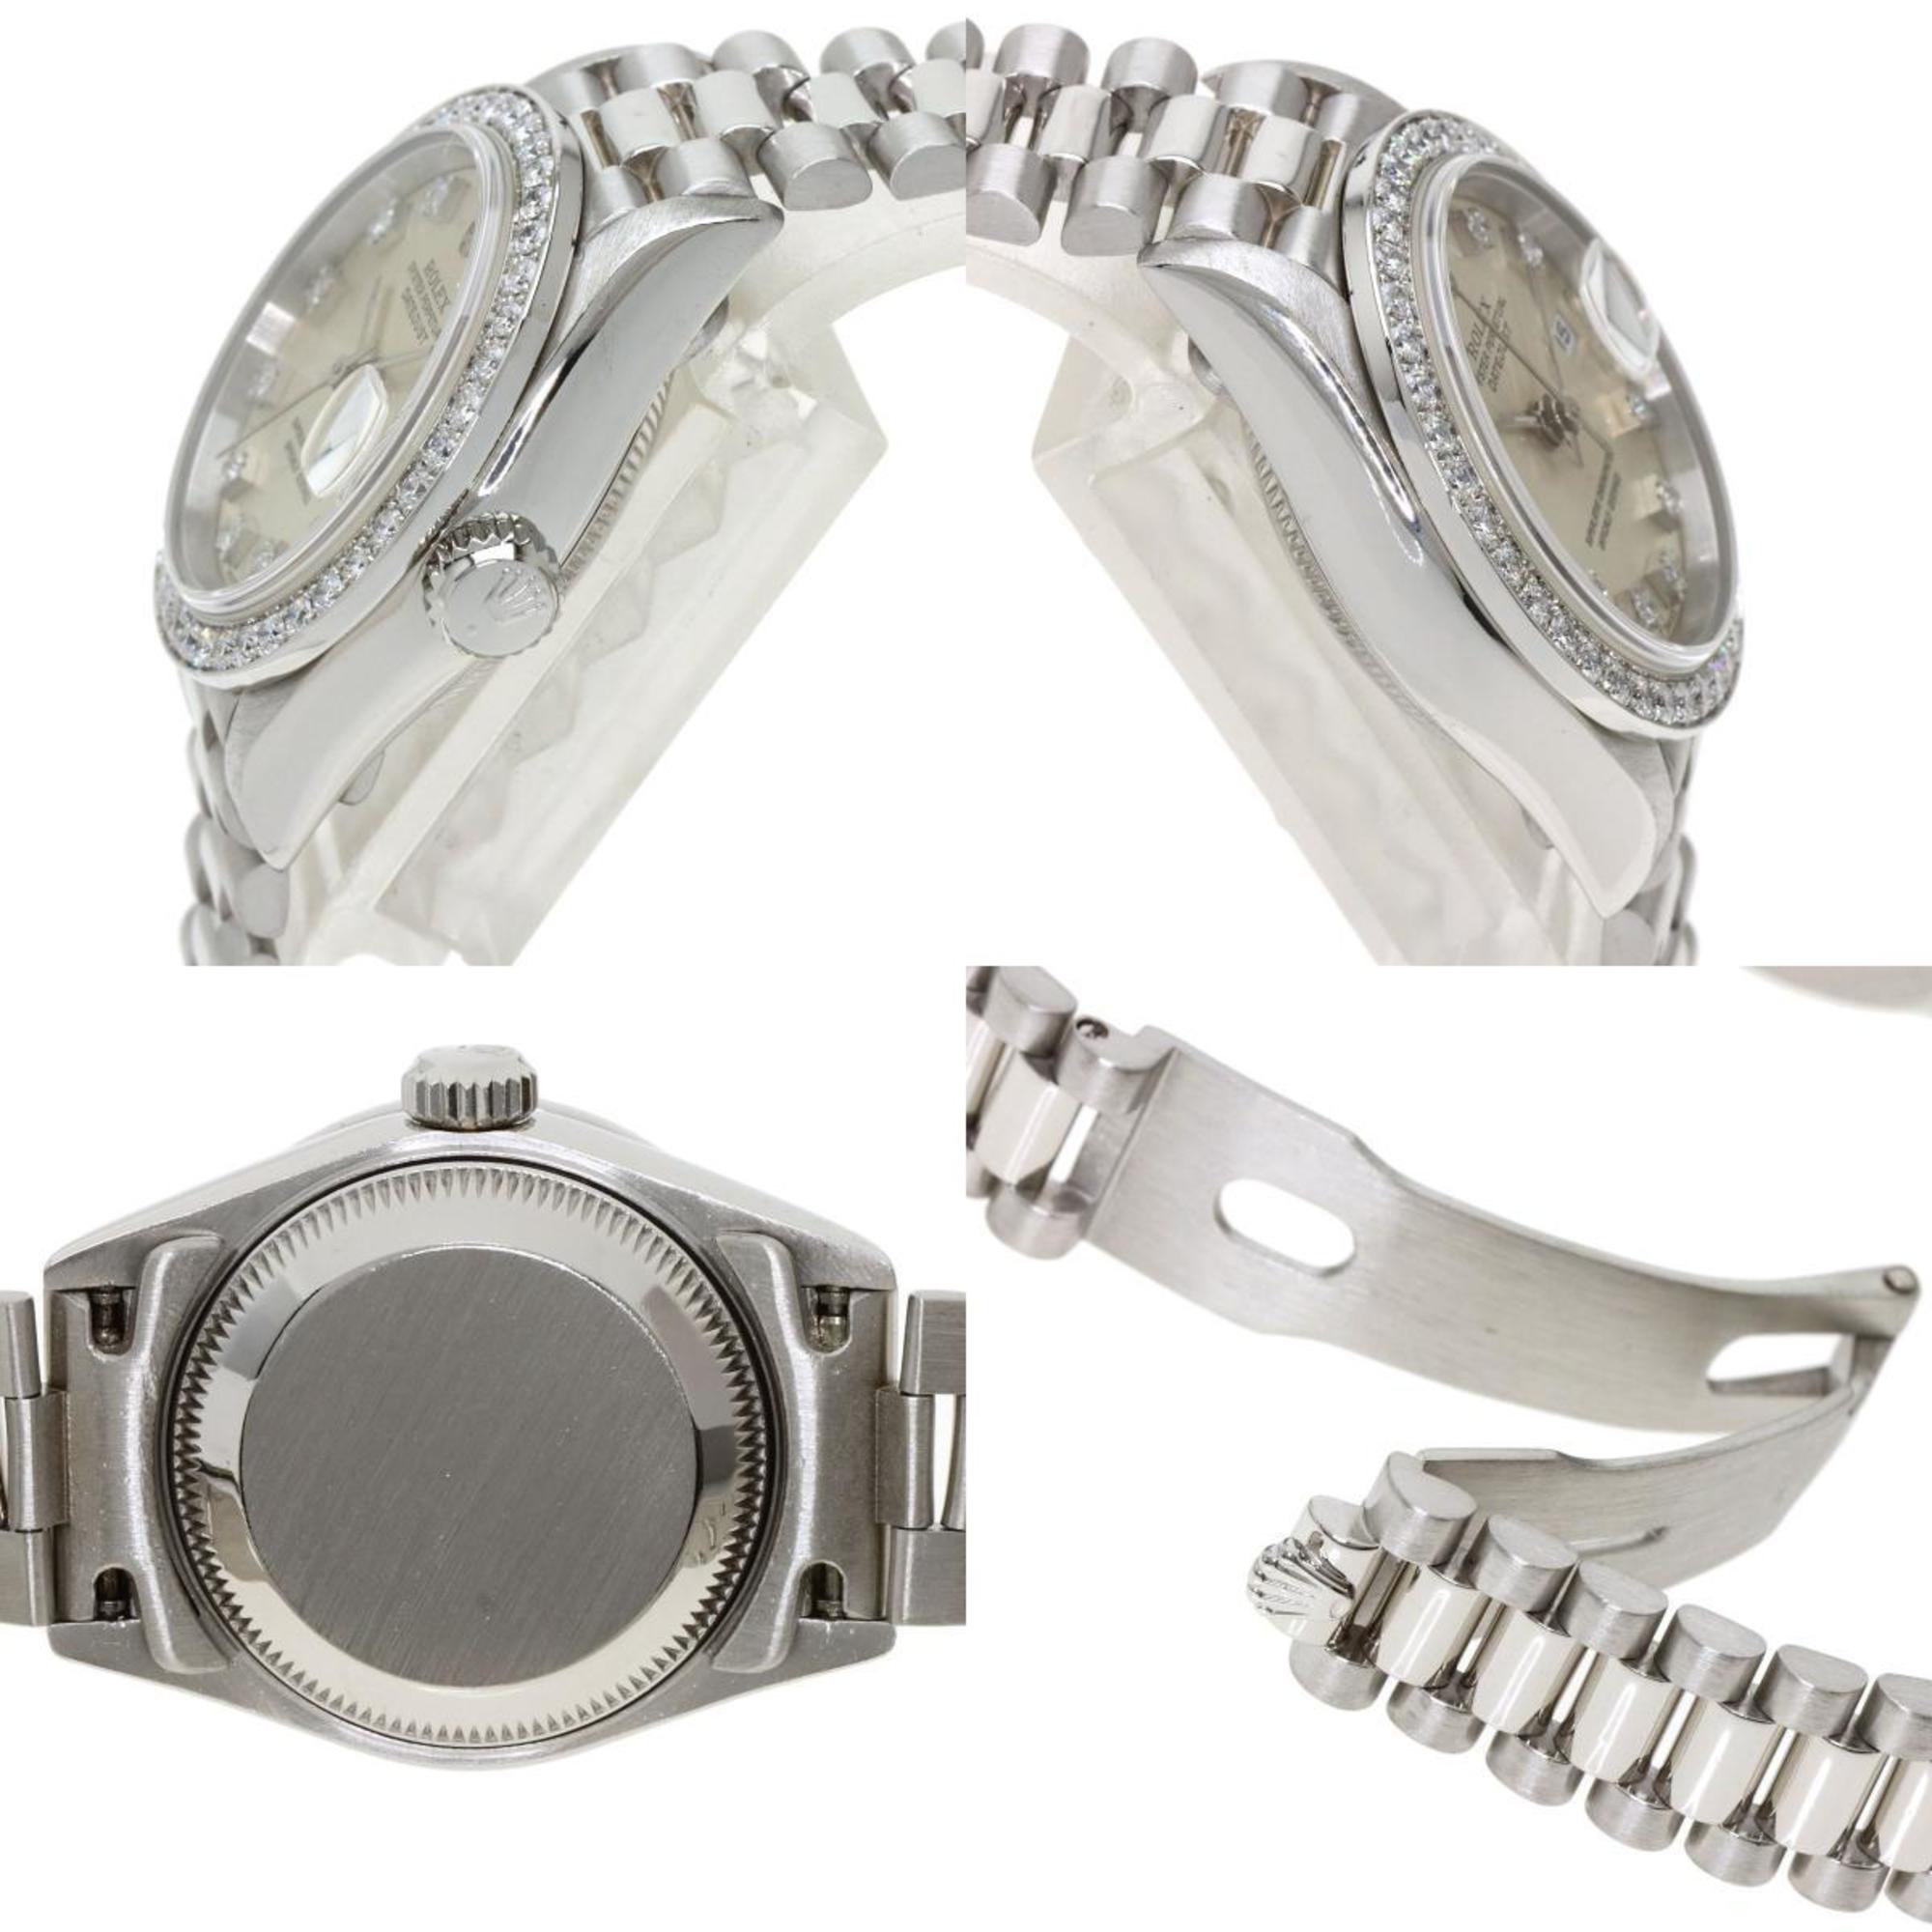 Rolex 69136G Datejust 10P Bezel Diamond Watch Platinum PT Ladies